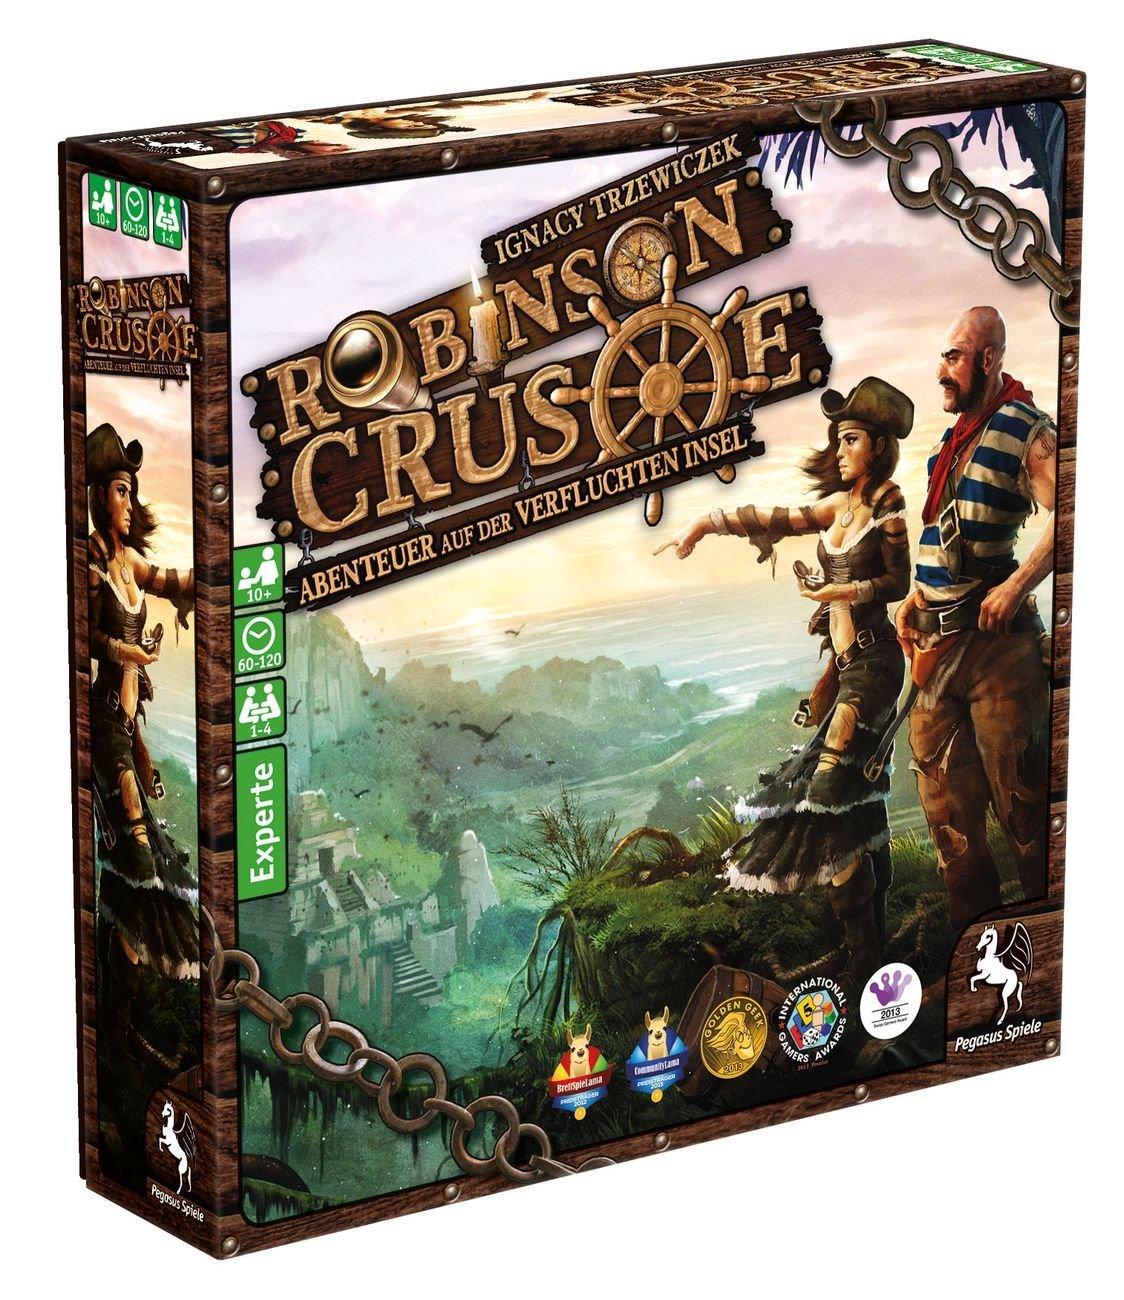 Robinson Crusoe Spielanleitung – PDF Download 0 (0)